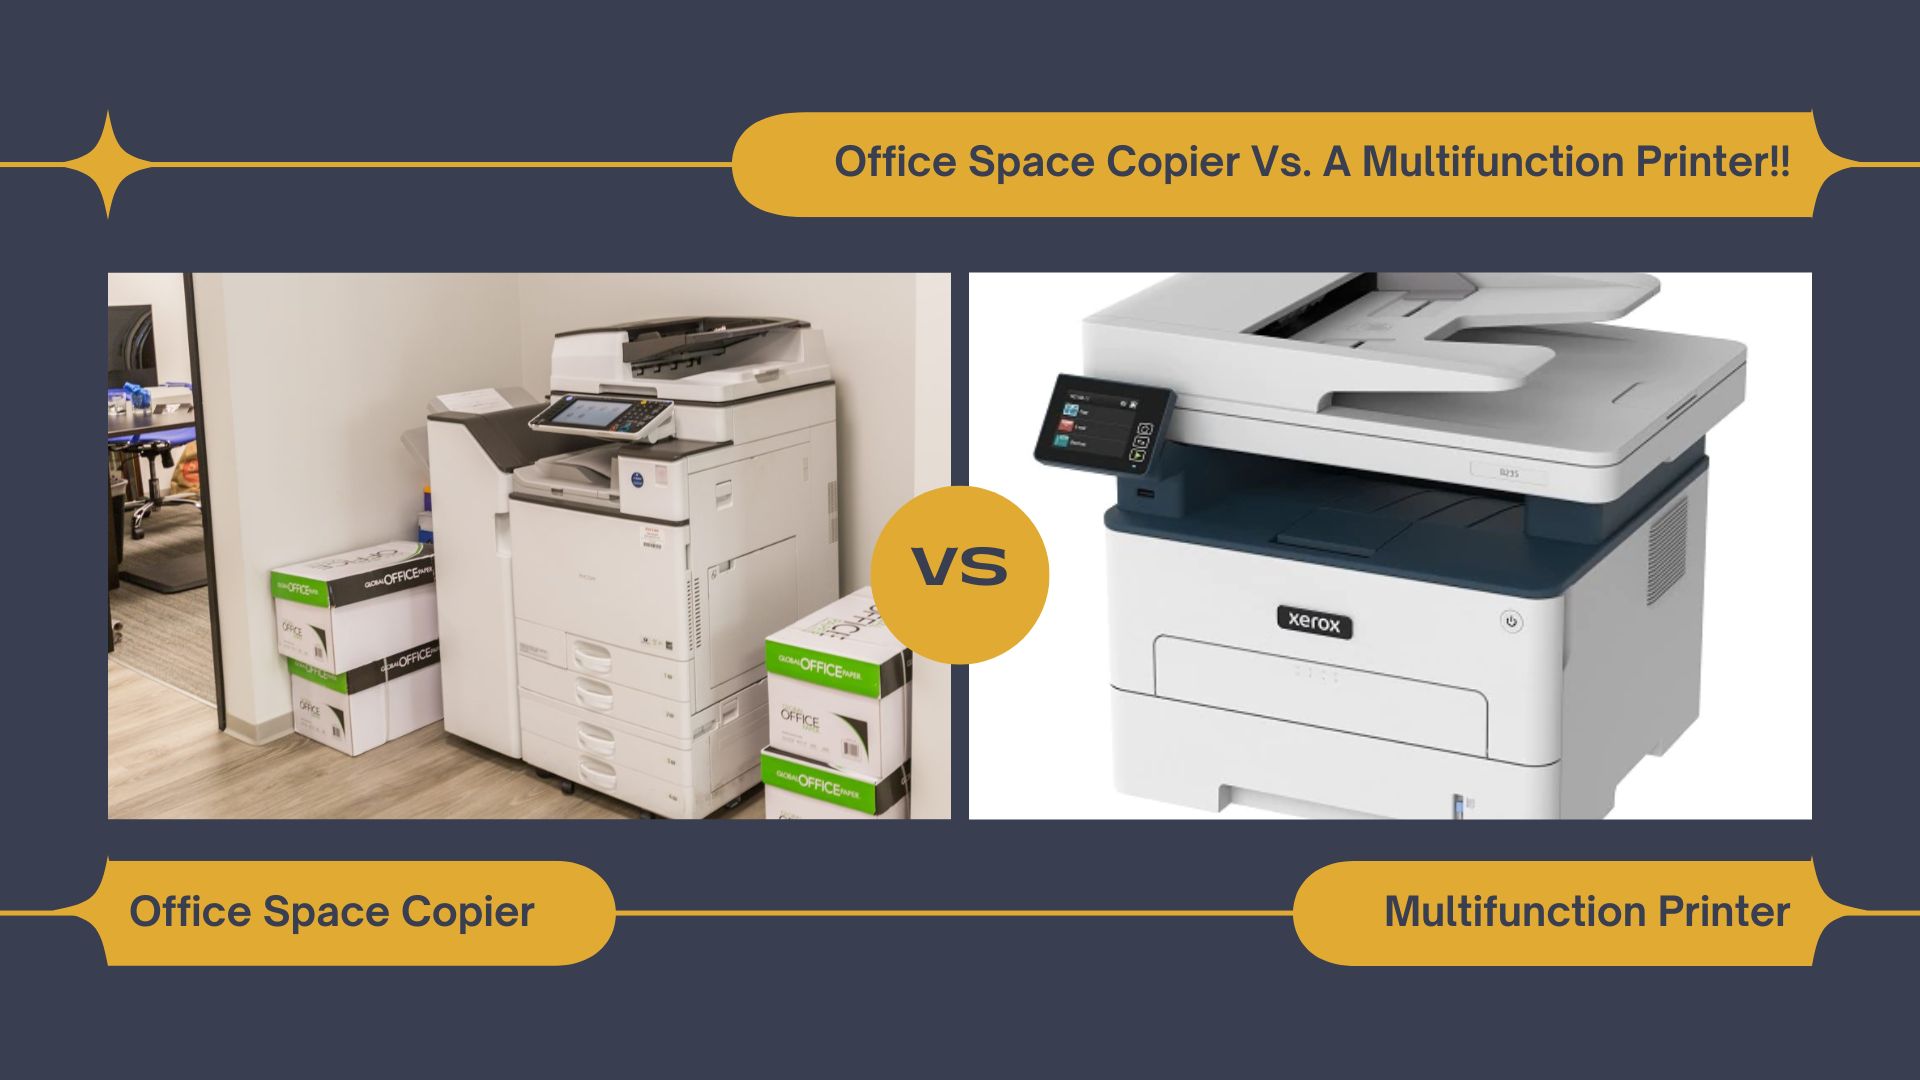 Office Space Copier Vs. A Multifunction Printer